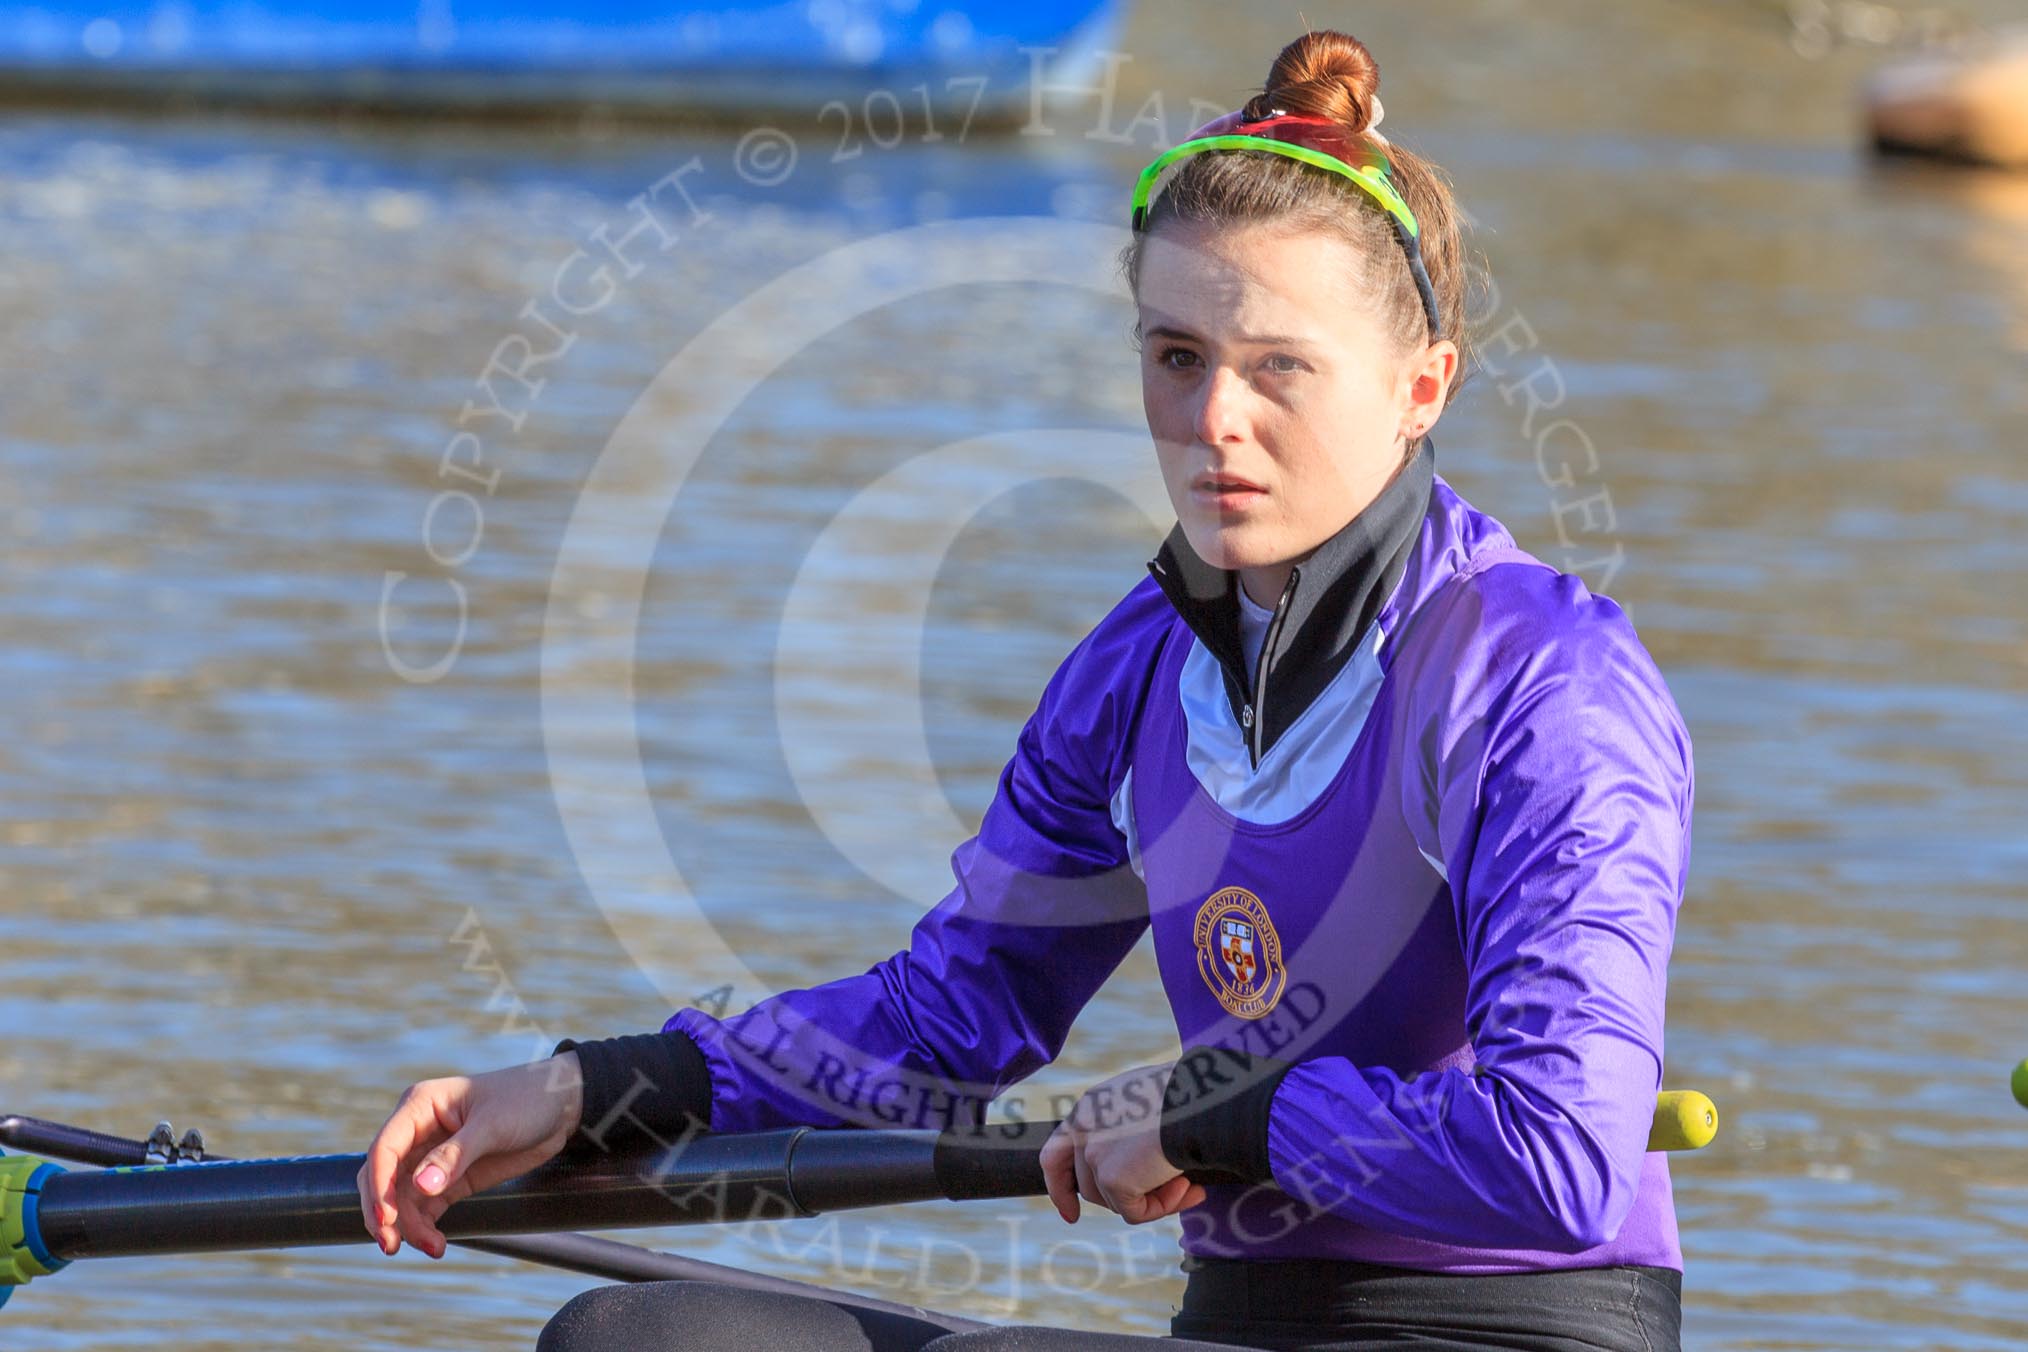 The Women's Boat Race season 2018 - fixture CUWBC vs. ULBC: ULBC 2 seat Robyn Hart-Winks.
River Thames between Putney Bridge and Mortlake,
London SW15,

United Kingdom,
on 17 February 2018 at 12:34, image #20